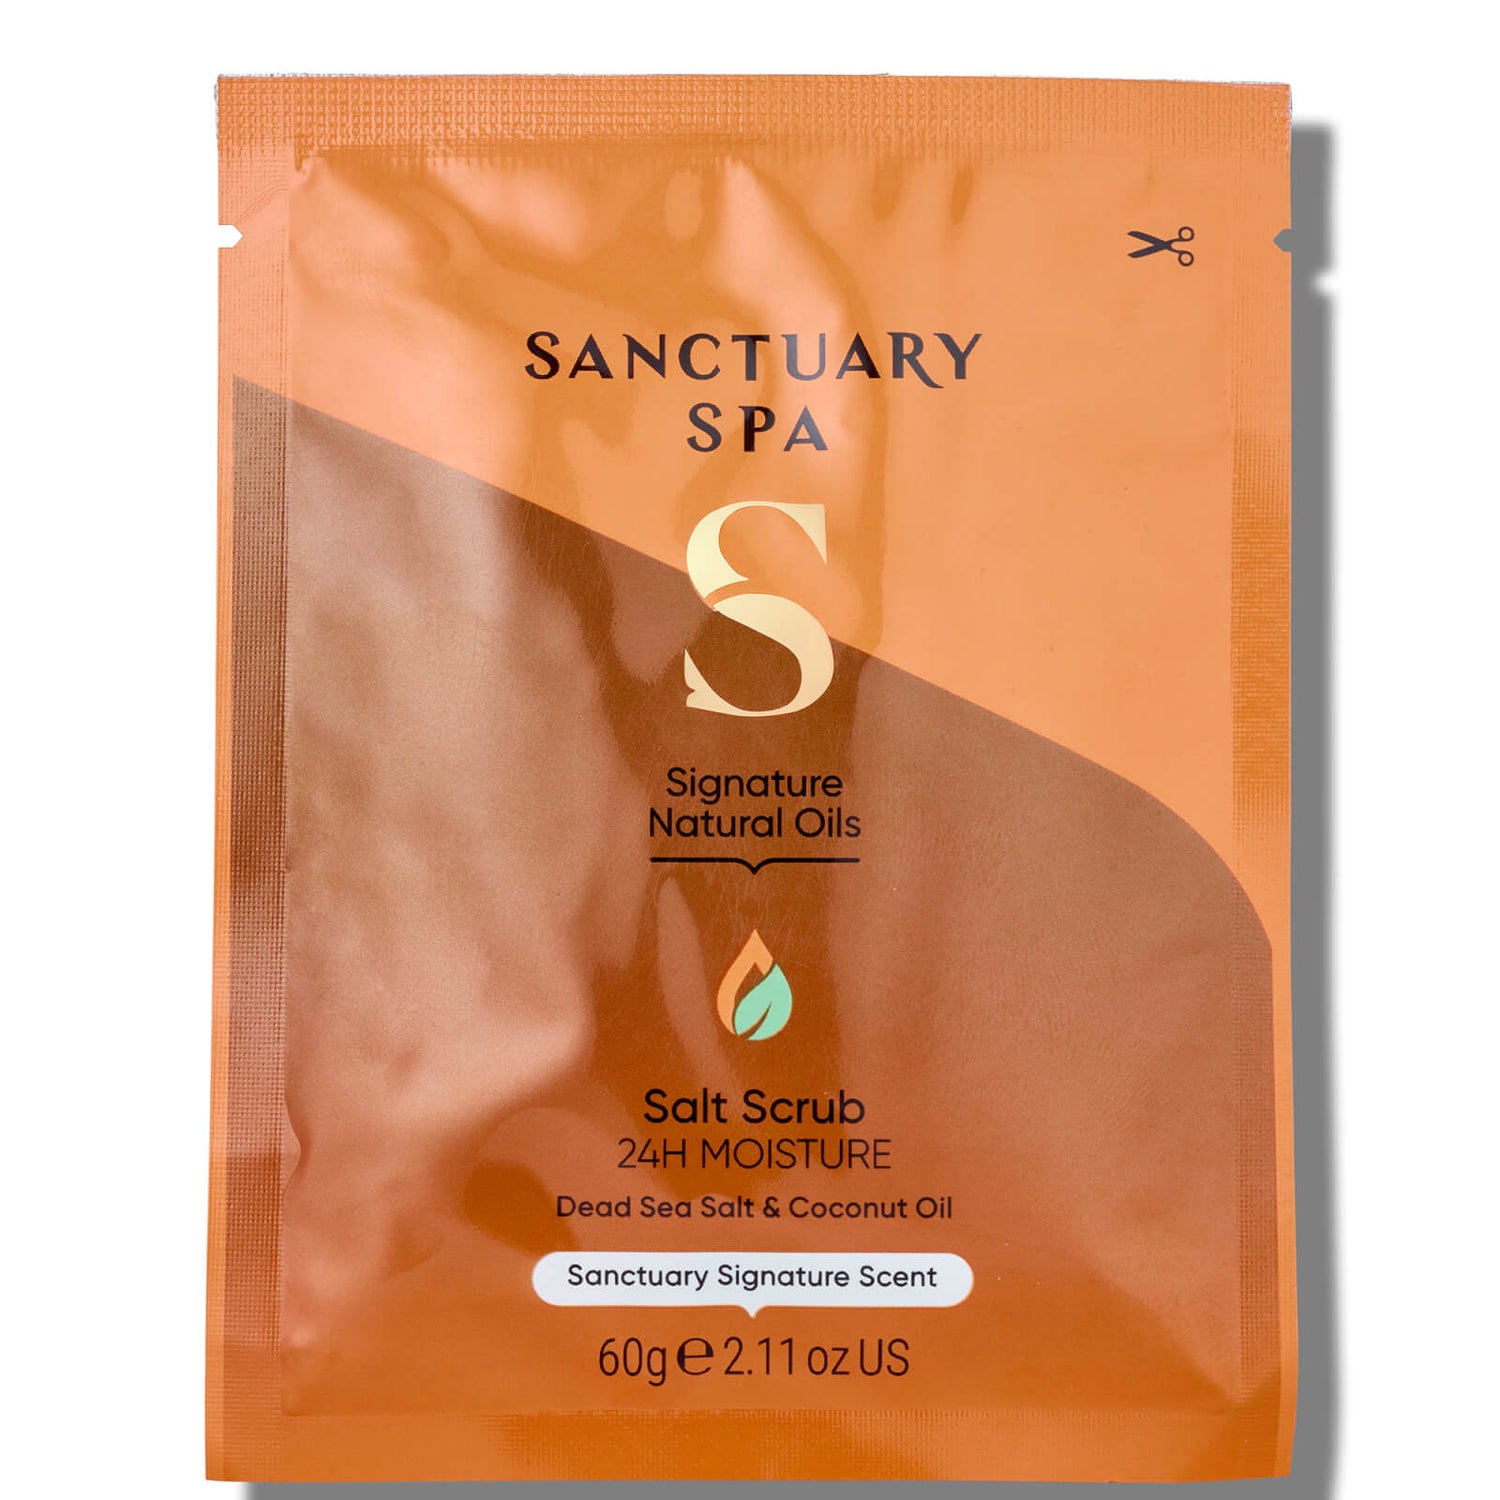 Sanctuary Spa Signature Natural Oils Salt Scrub 60g